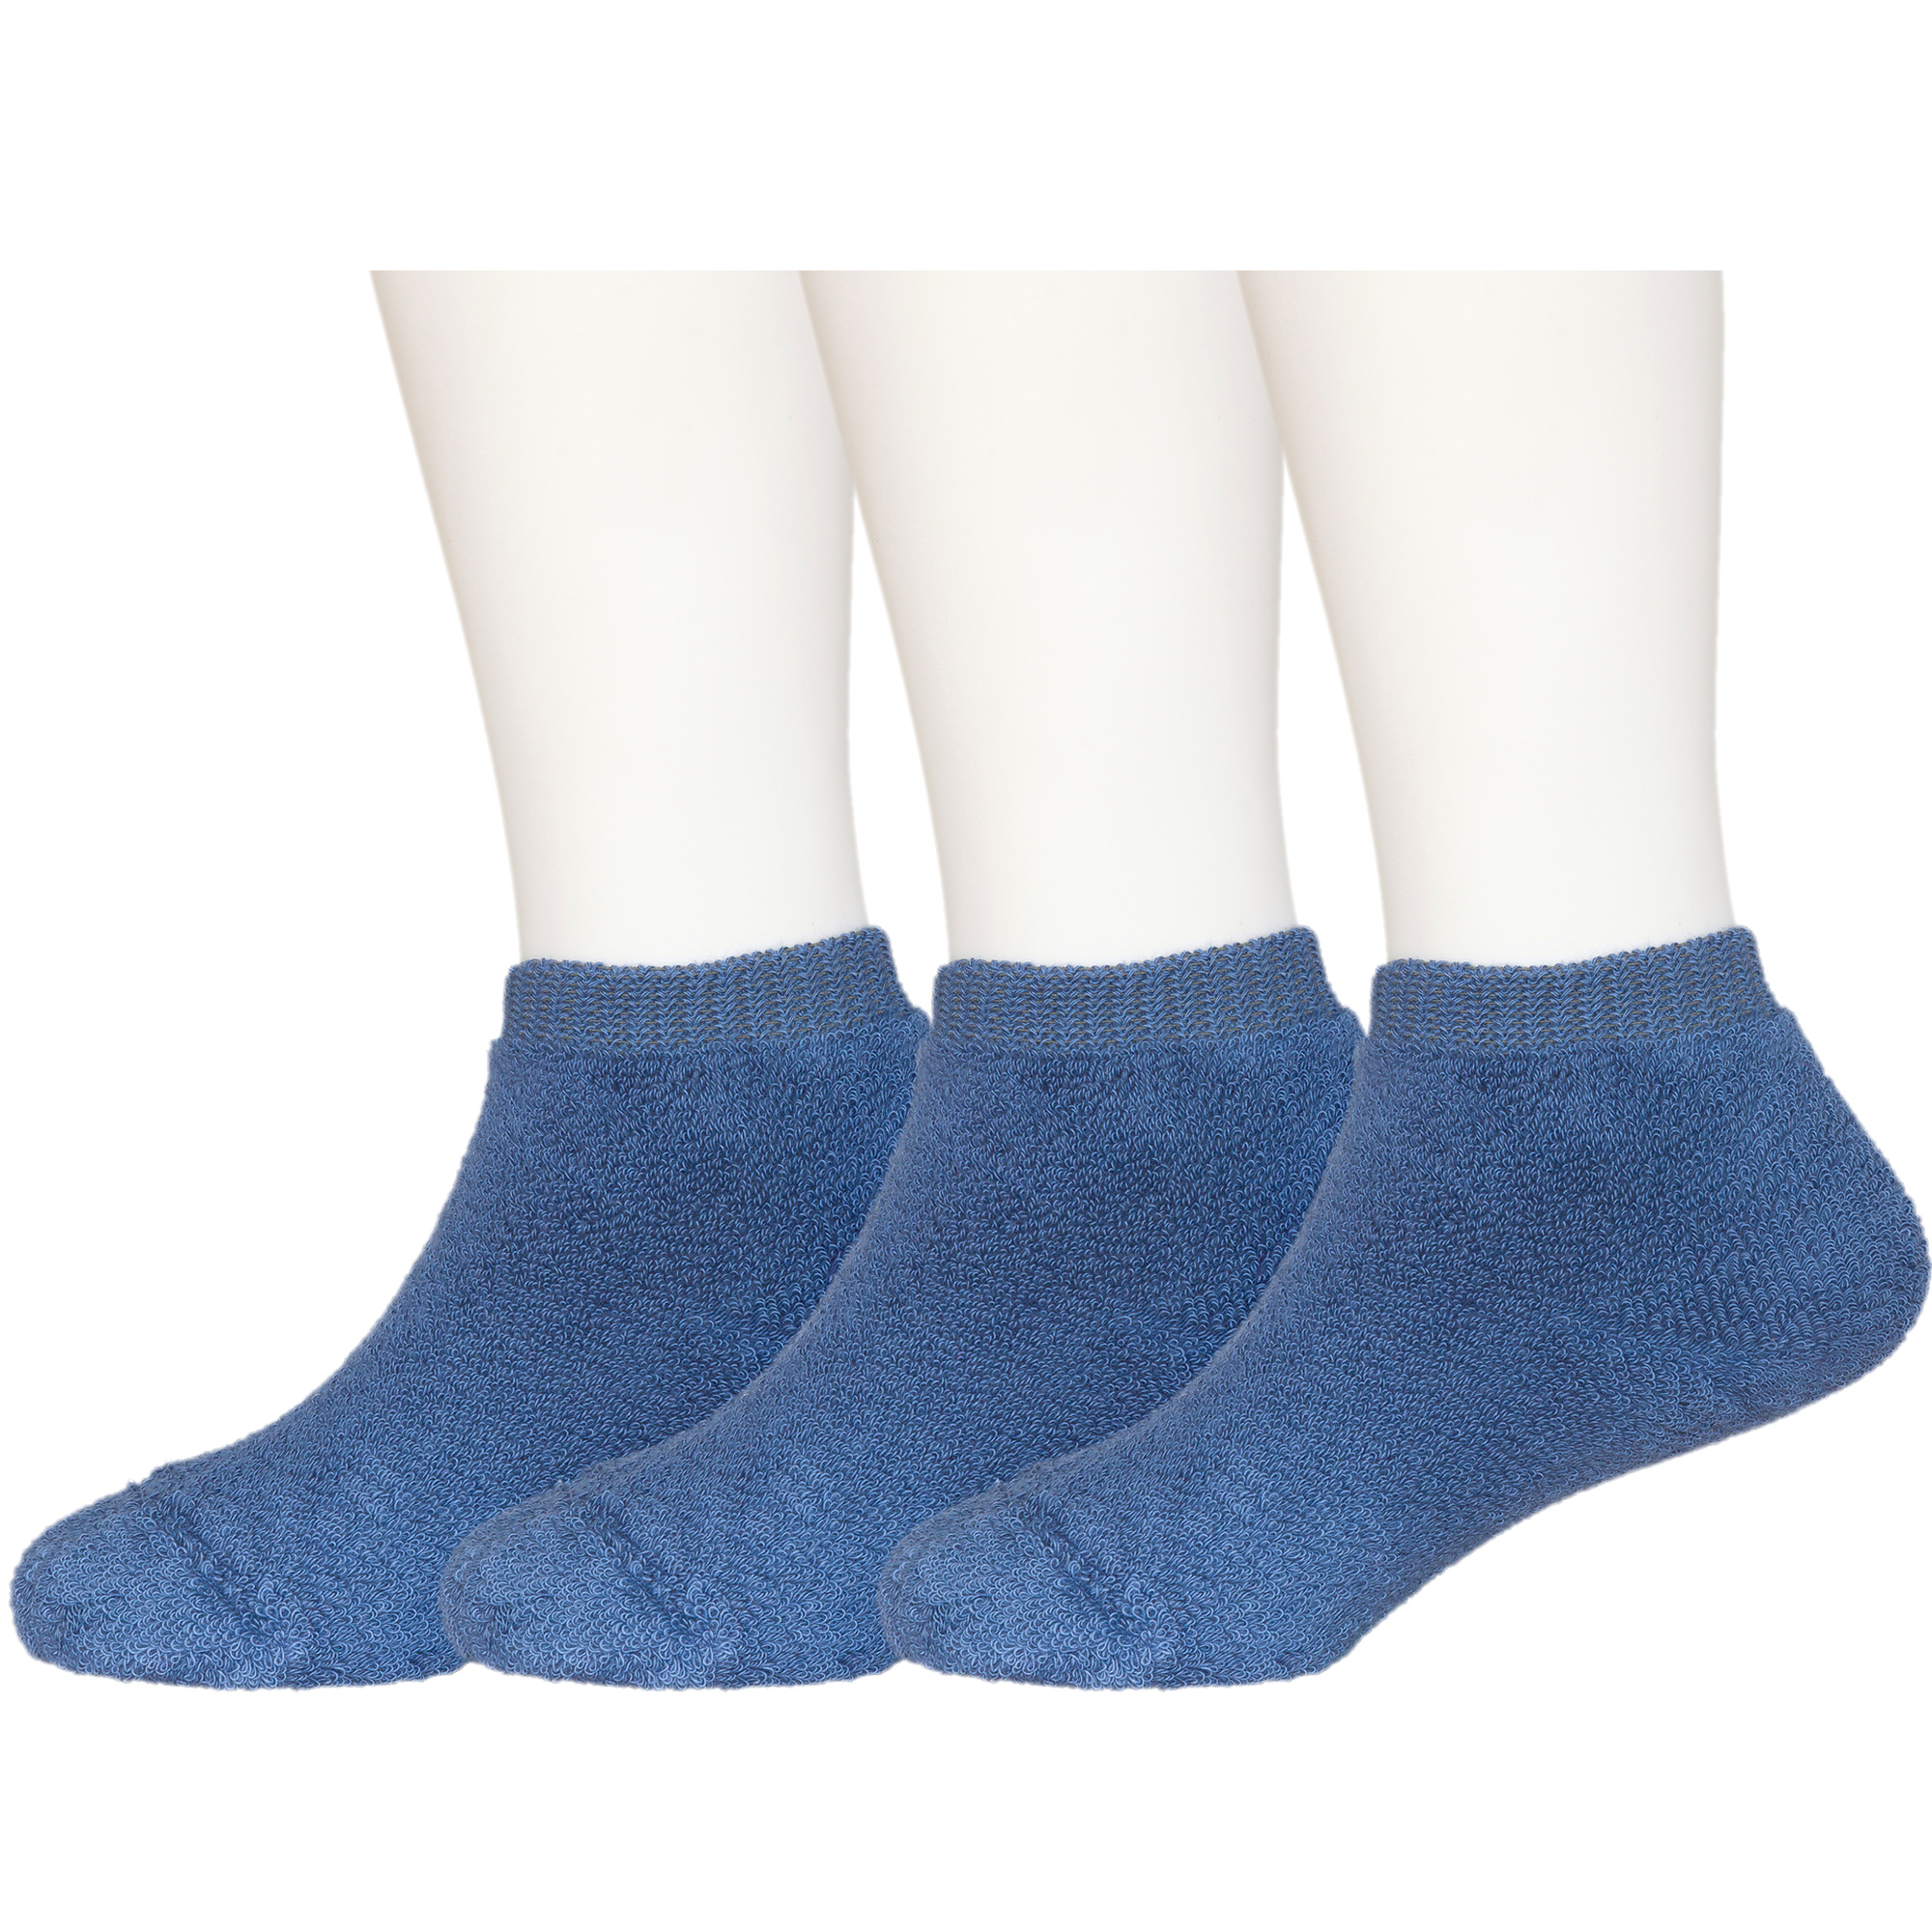 Носки для девочек ХОХ 3-DZ-3R18 цв. голубой р. 26-28